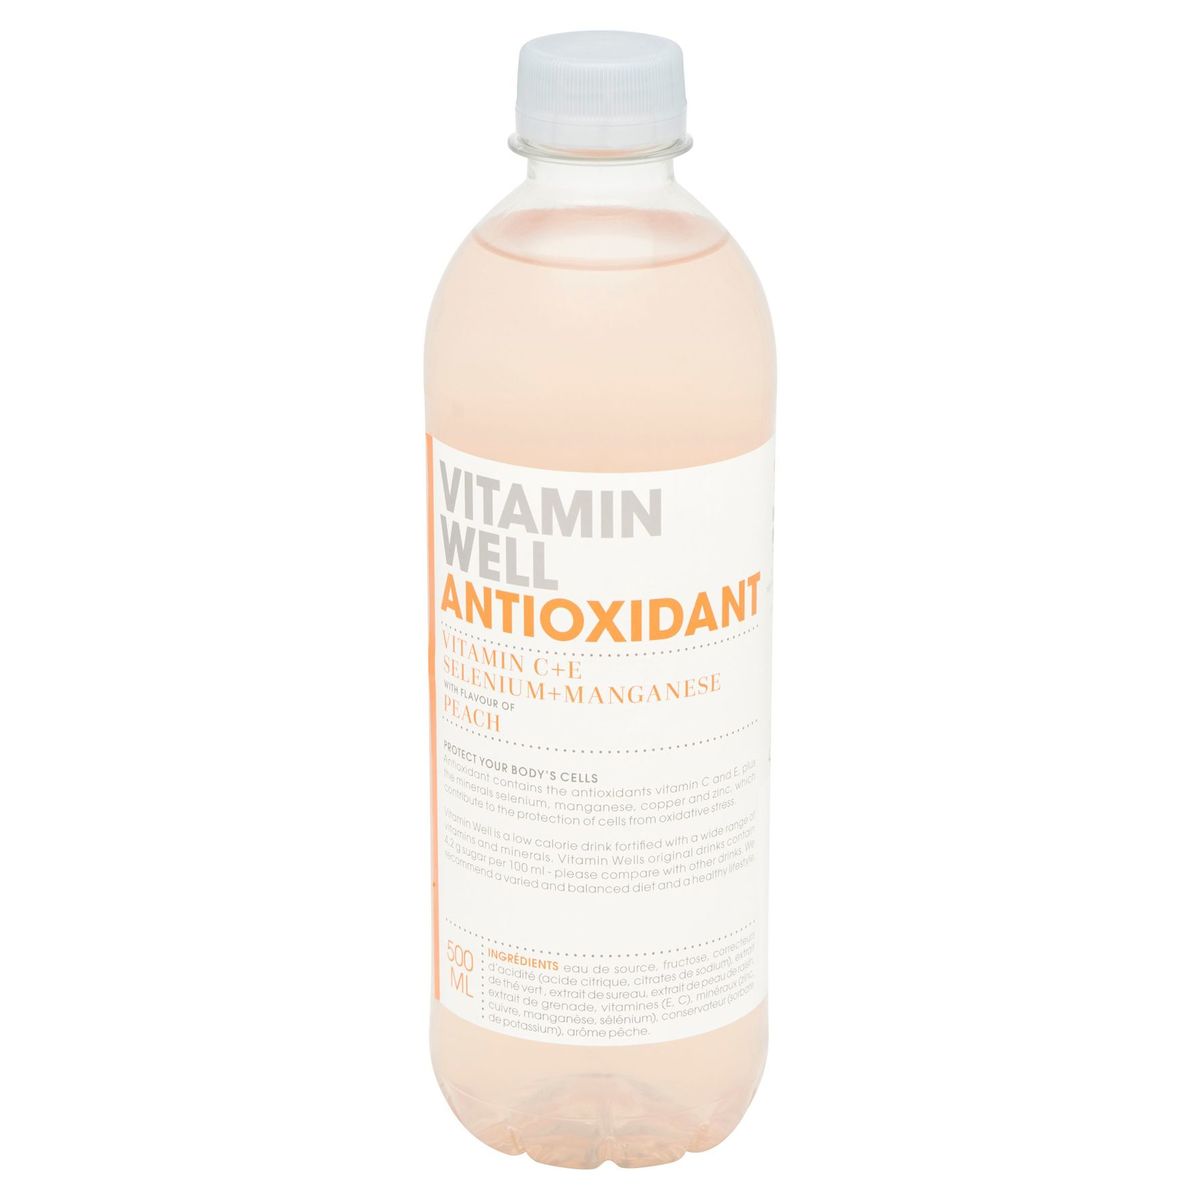 Vitamin Well Antioxidant Vitamin C + E Selenium + Manganese 500 ml